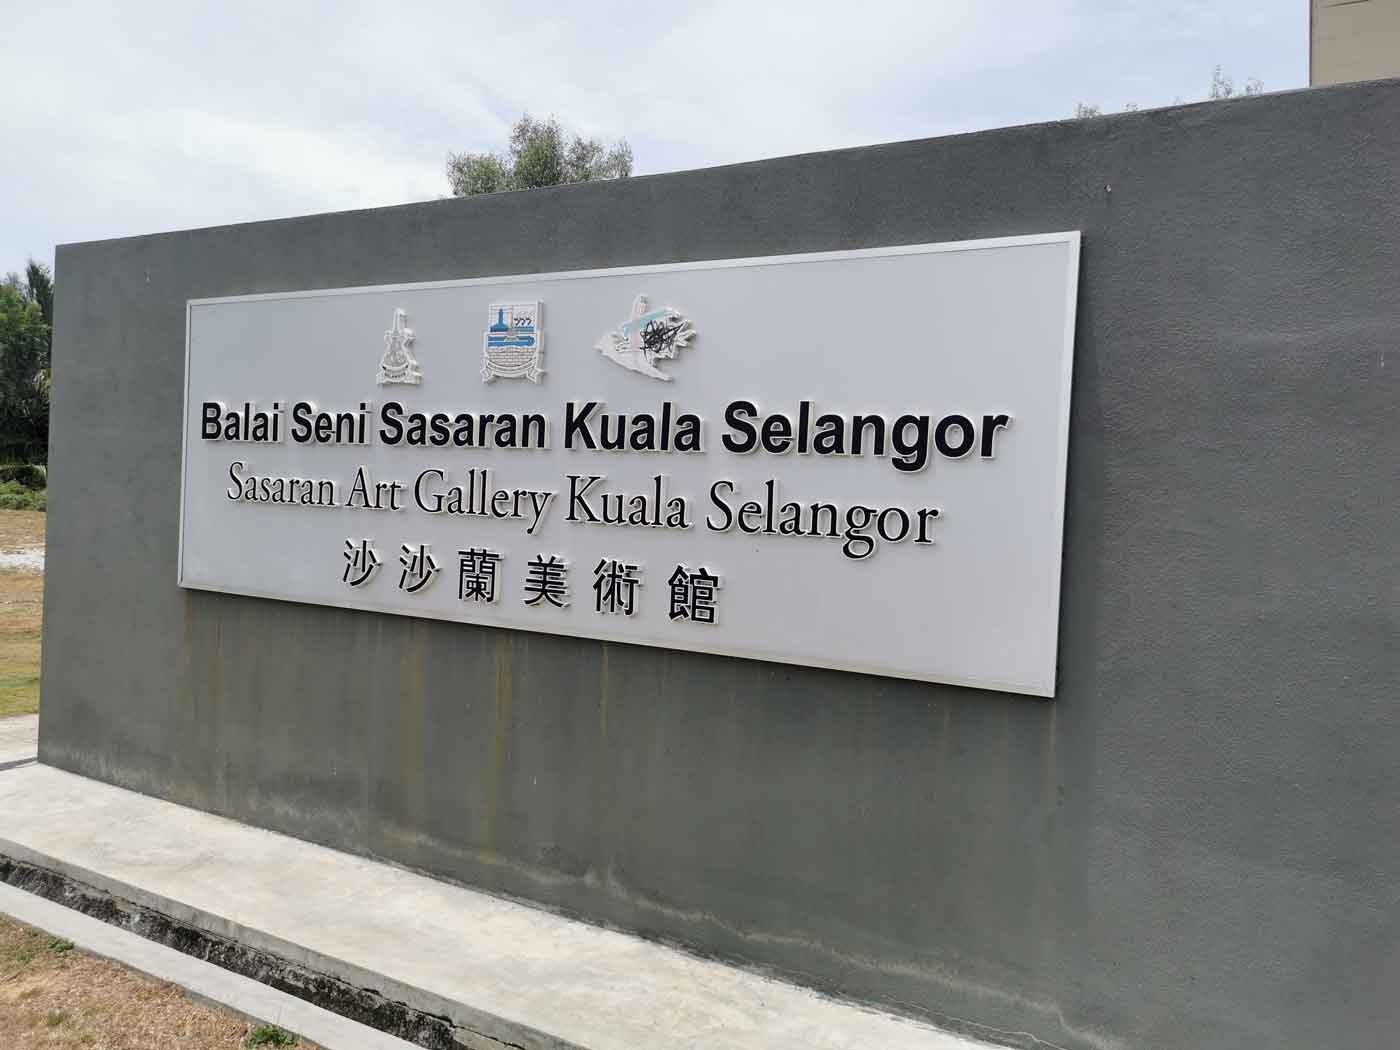 Balai Seni Sasaran Kuala Selangor / Sasaran Art Gallery